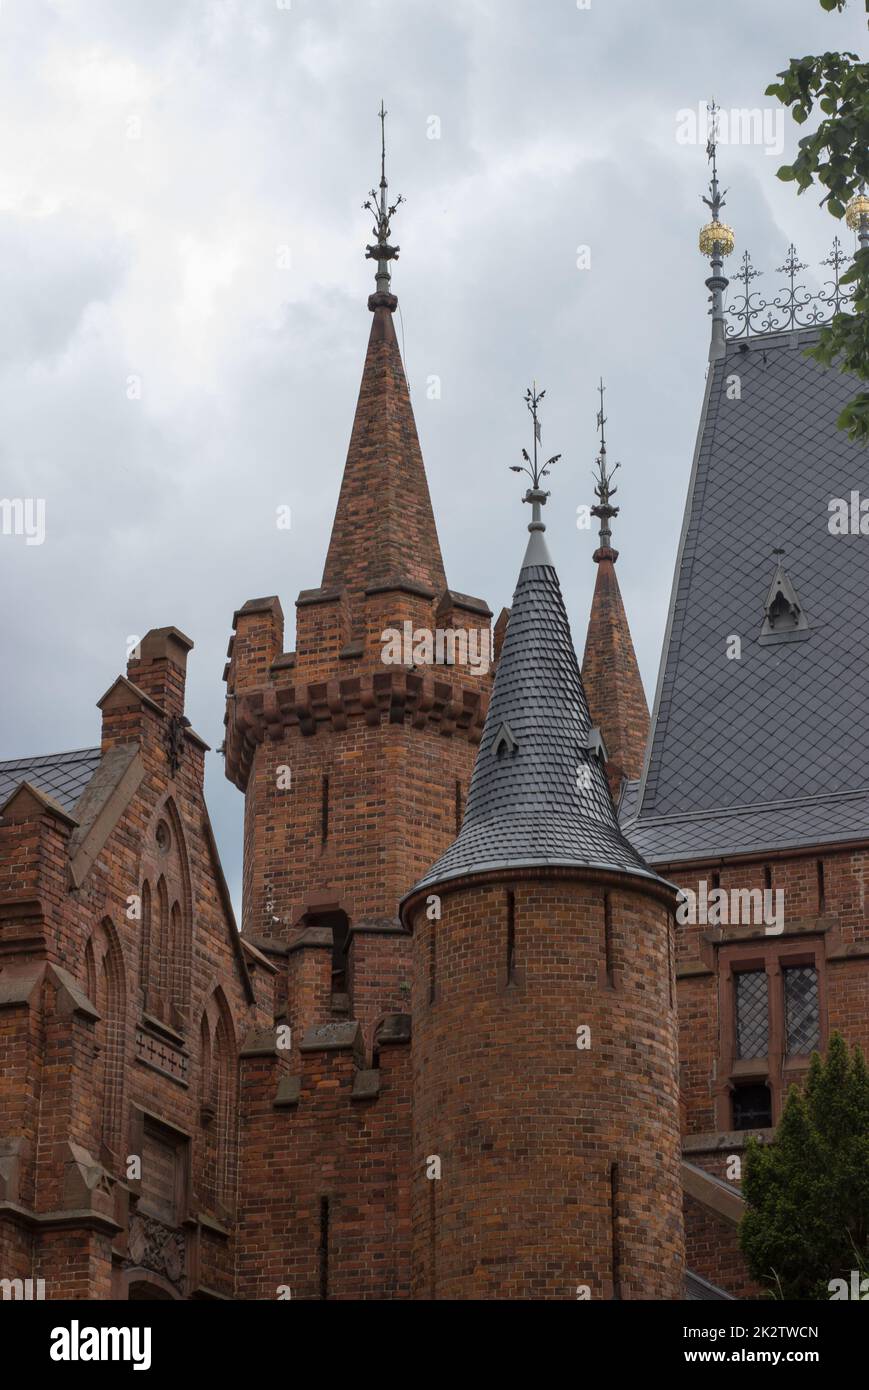 Castle tower hradec nad moravici in moravia, opava region, silesia, czech republic. Famous national cultural landmark. Stock Photo